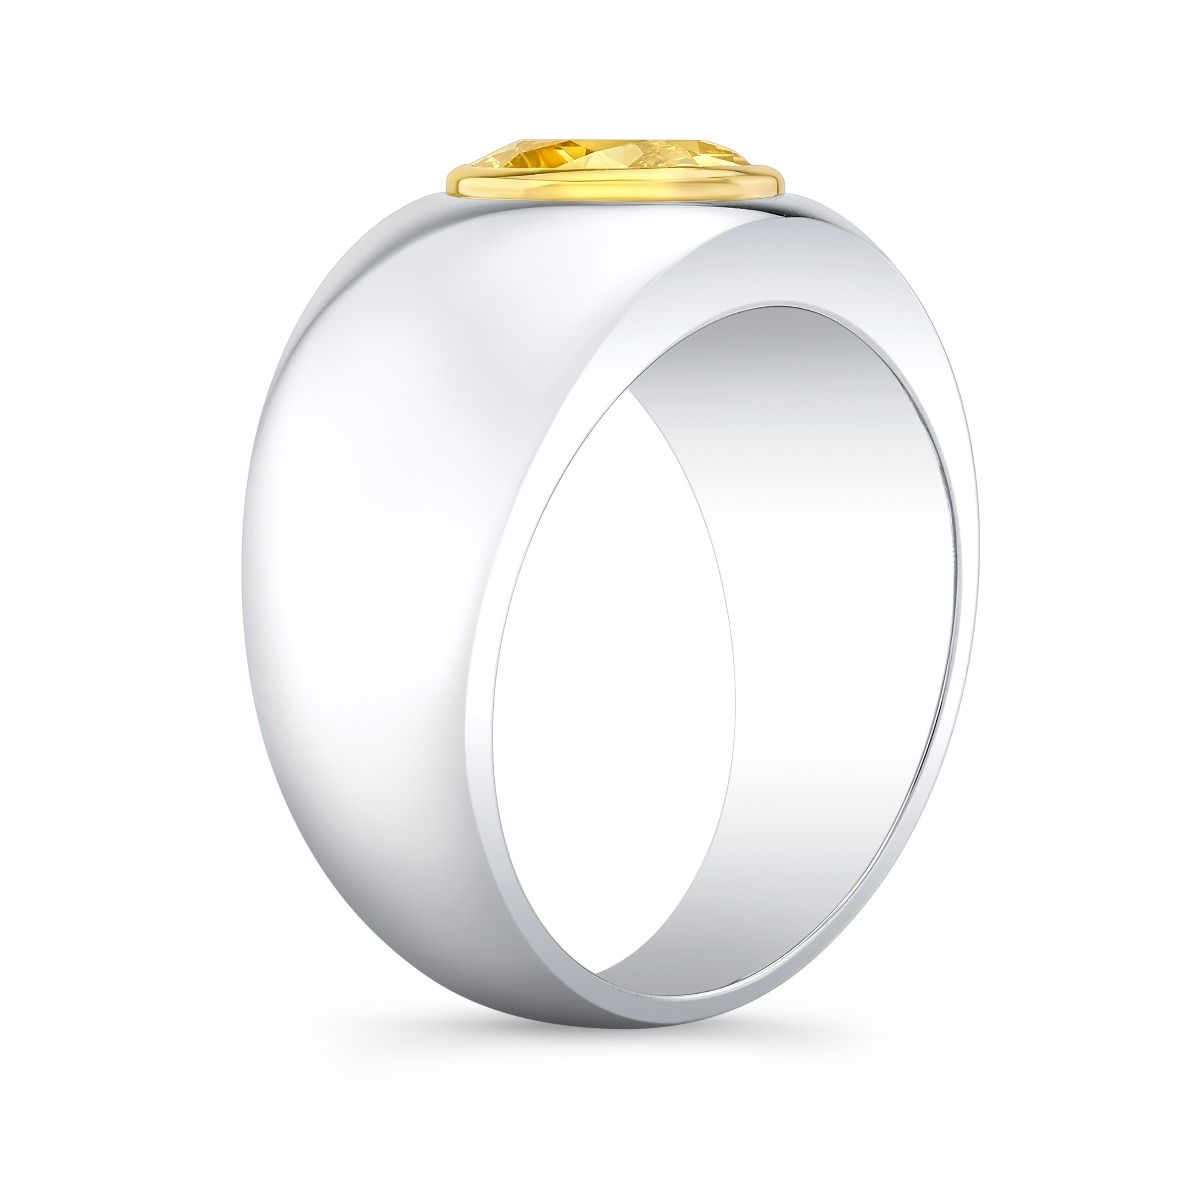 Buy Gold & Diamond Jewellery For Men Online | CaratLane